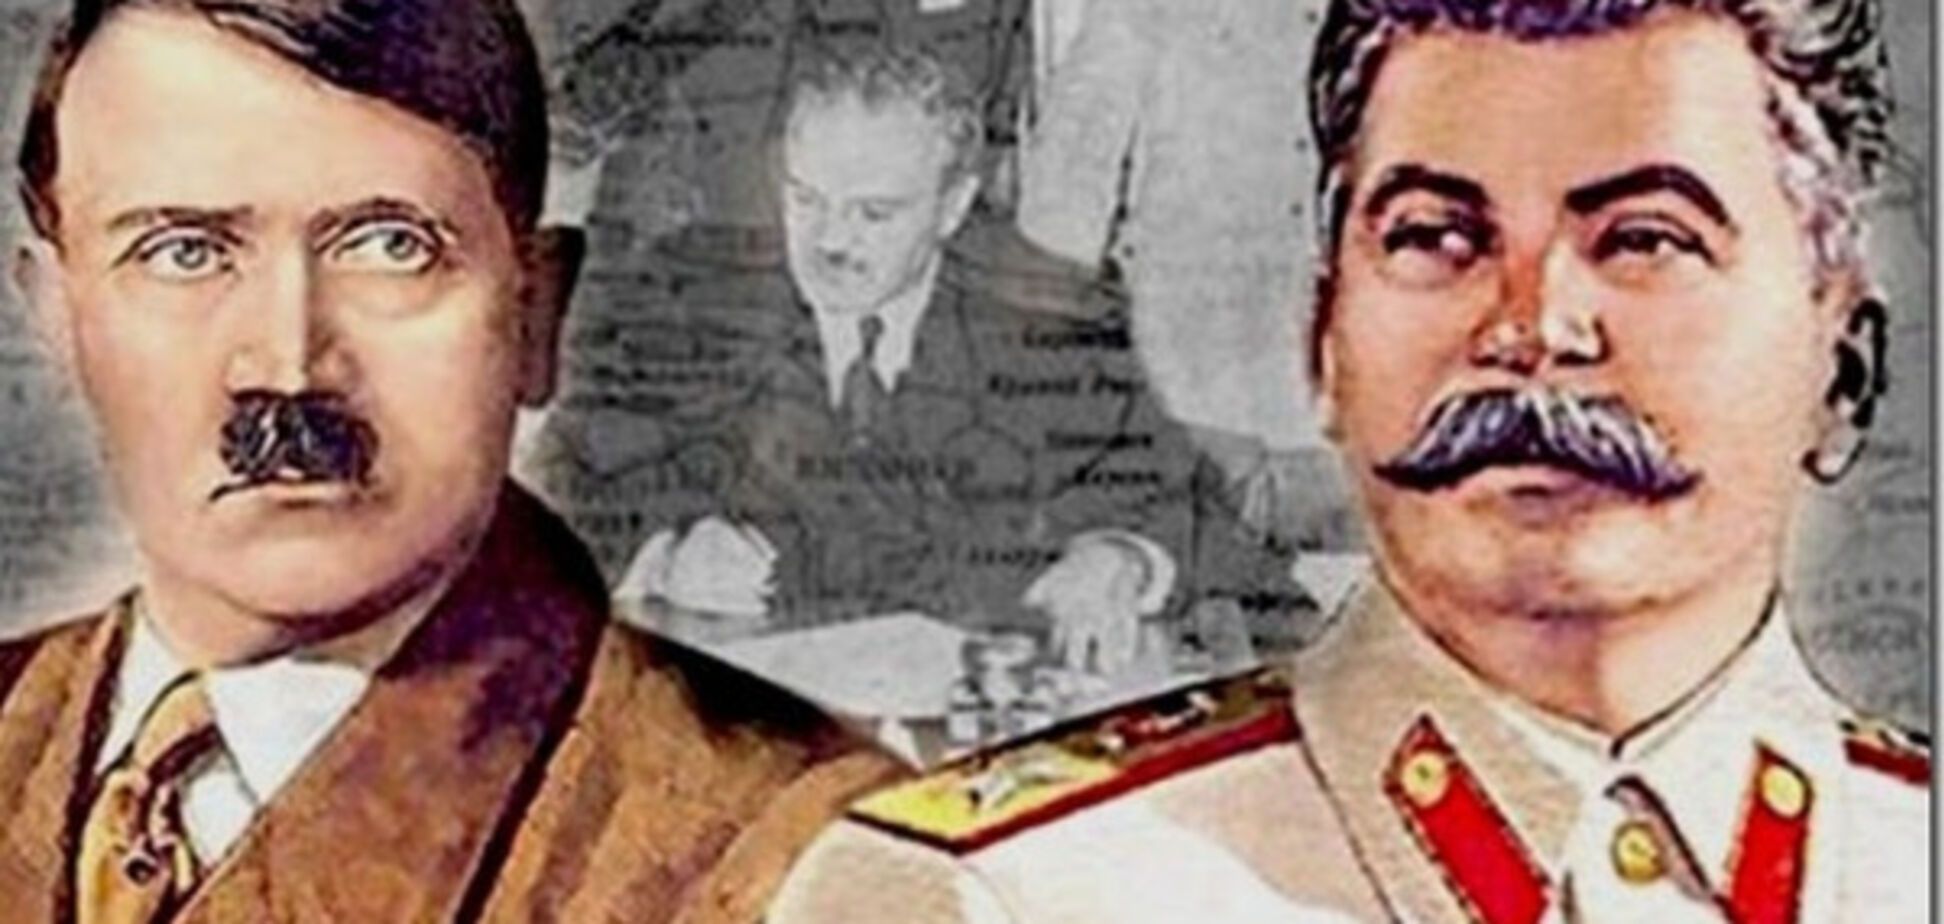 Сталин и Гитлер